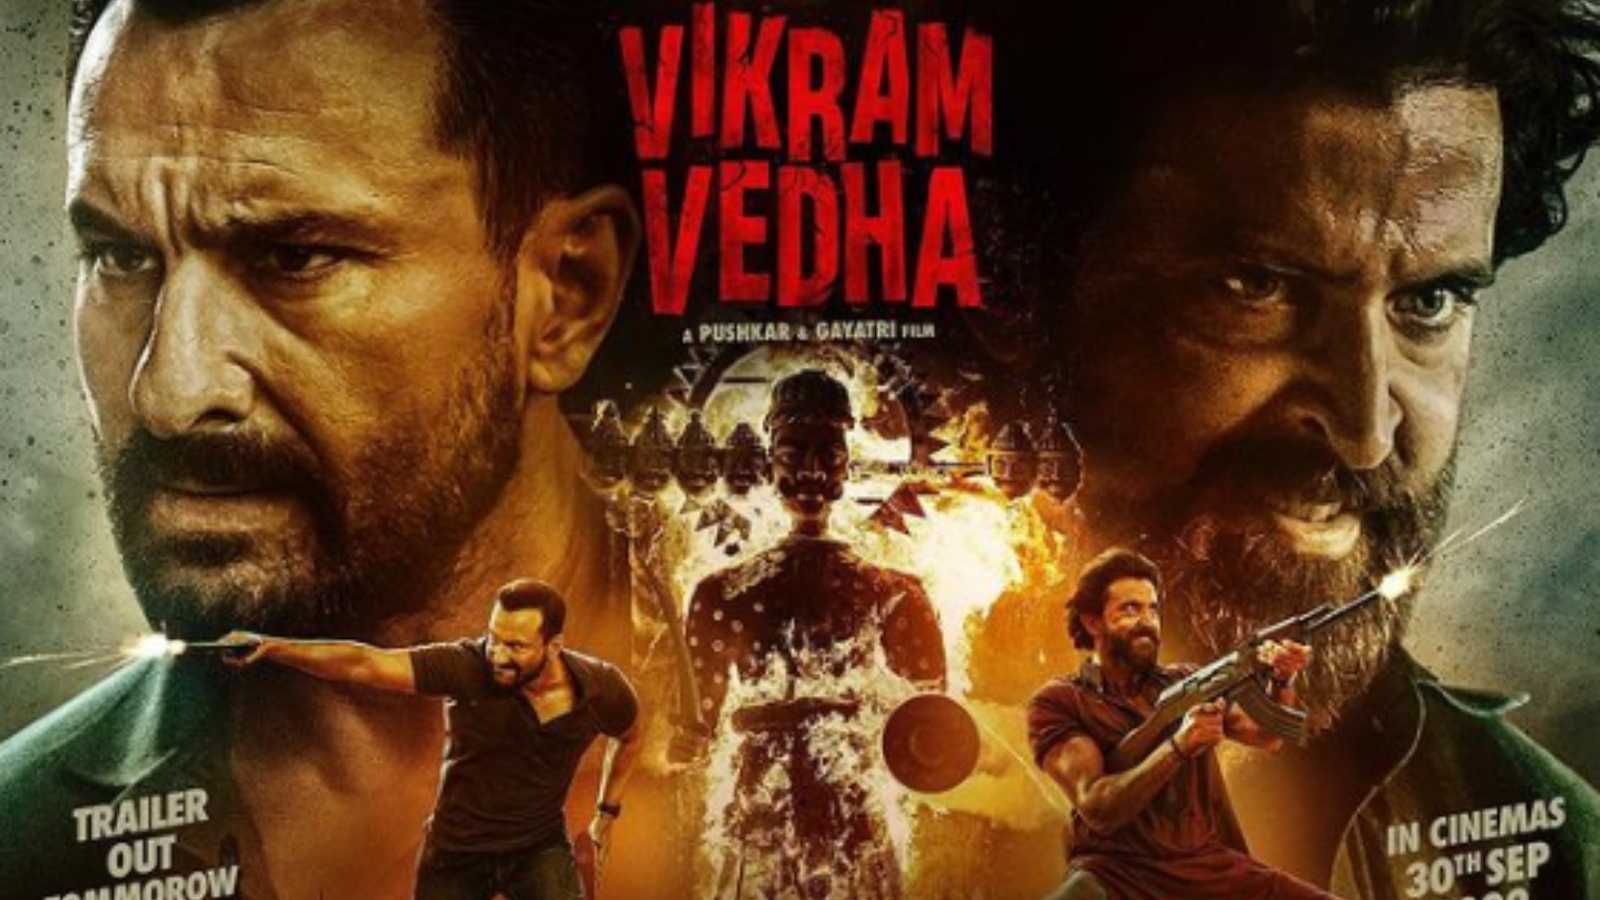 Vikram Vedha trailer